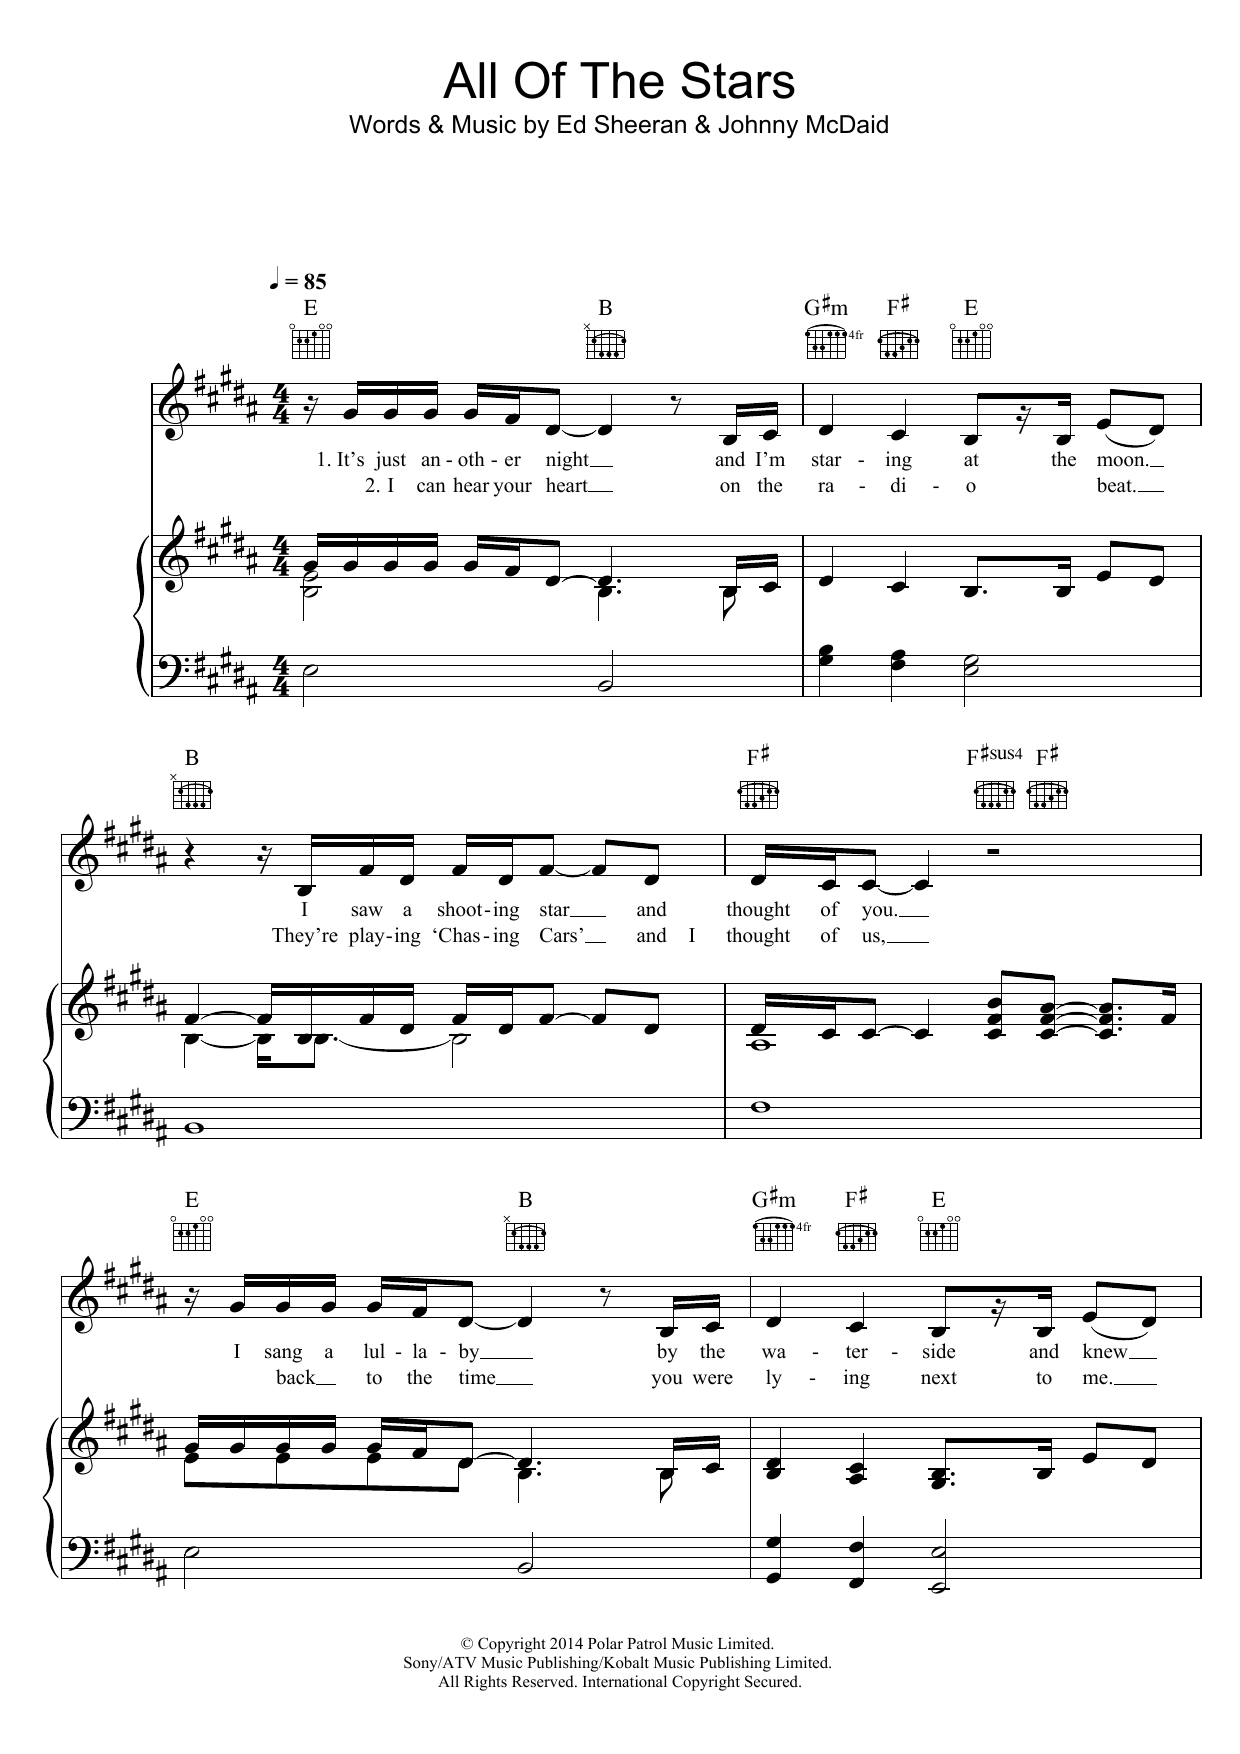 Ed Sheeran All Of The Stars Sheet Music Notes & Chords for Guitar Tab Play-Along - Download or Print PDF